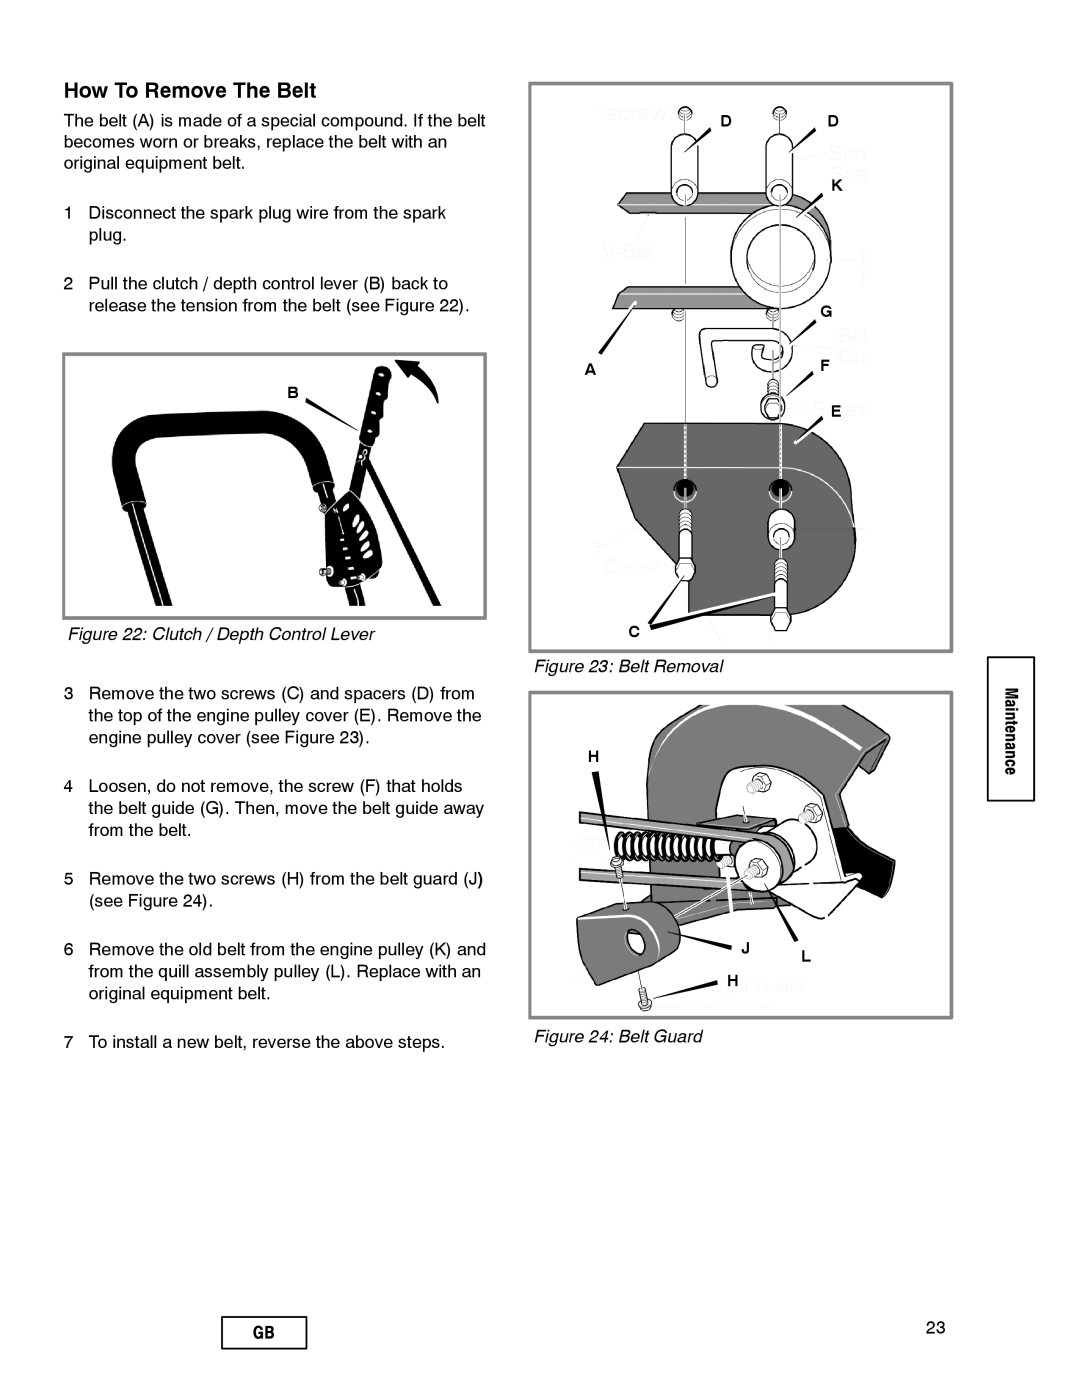 Husqvarna LE389 manual How To Remove The Belt, Clutch / Depth Control Lever, Belt Removal, Belt Guard 